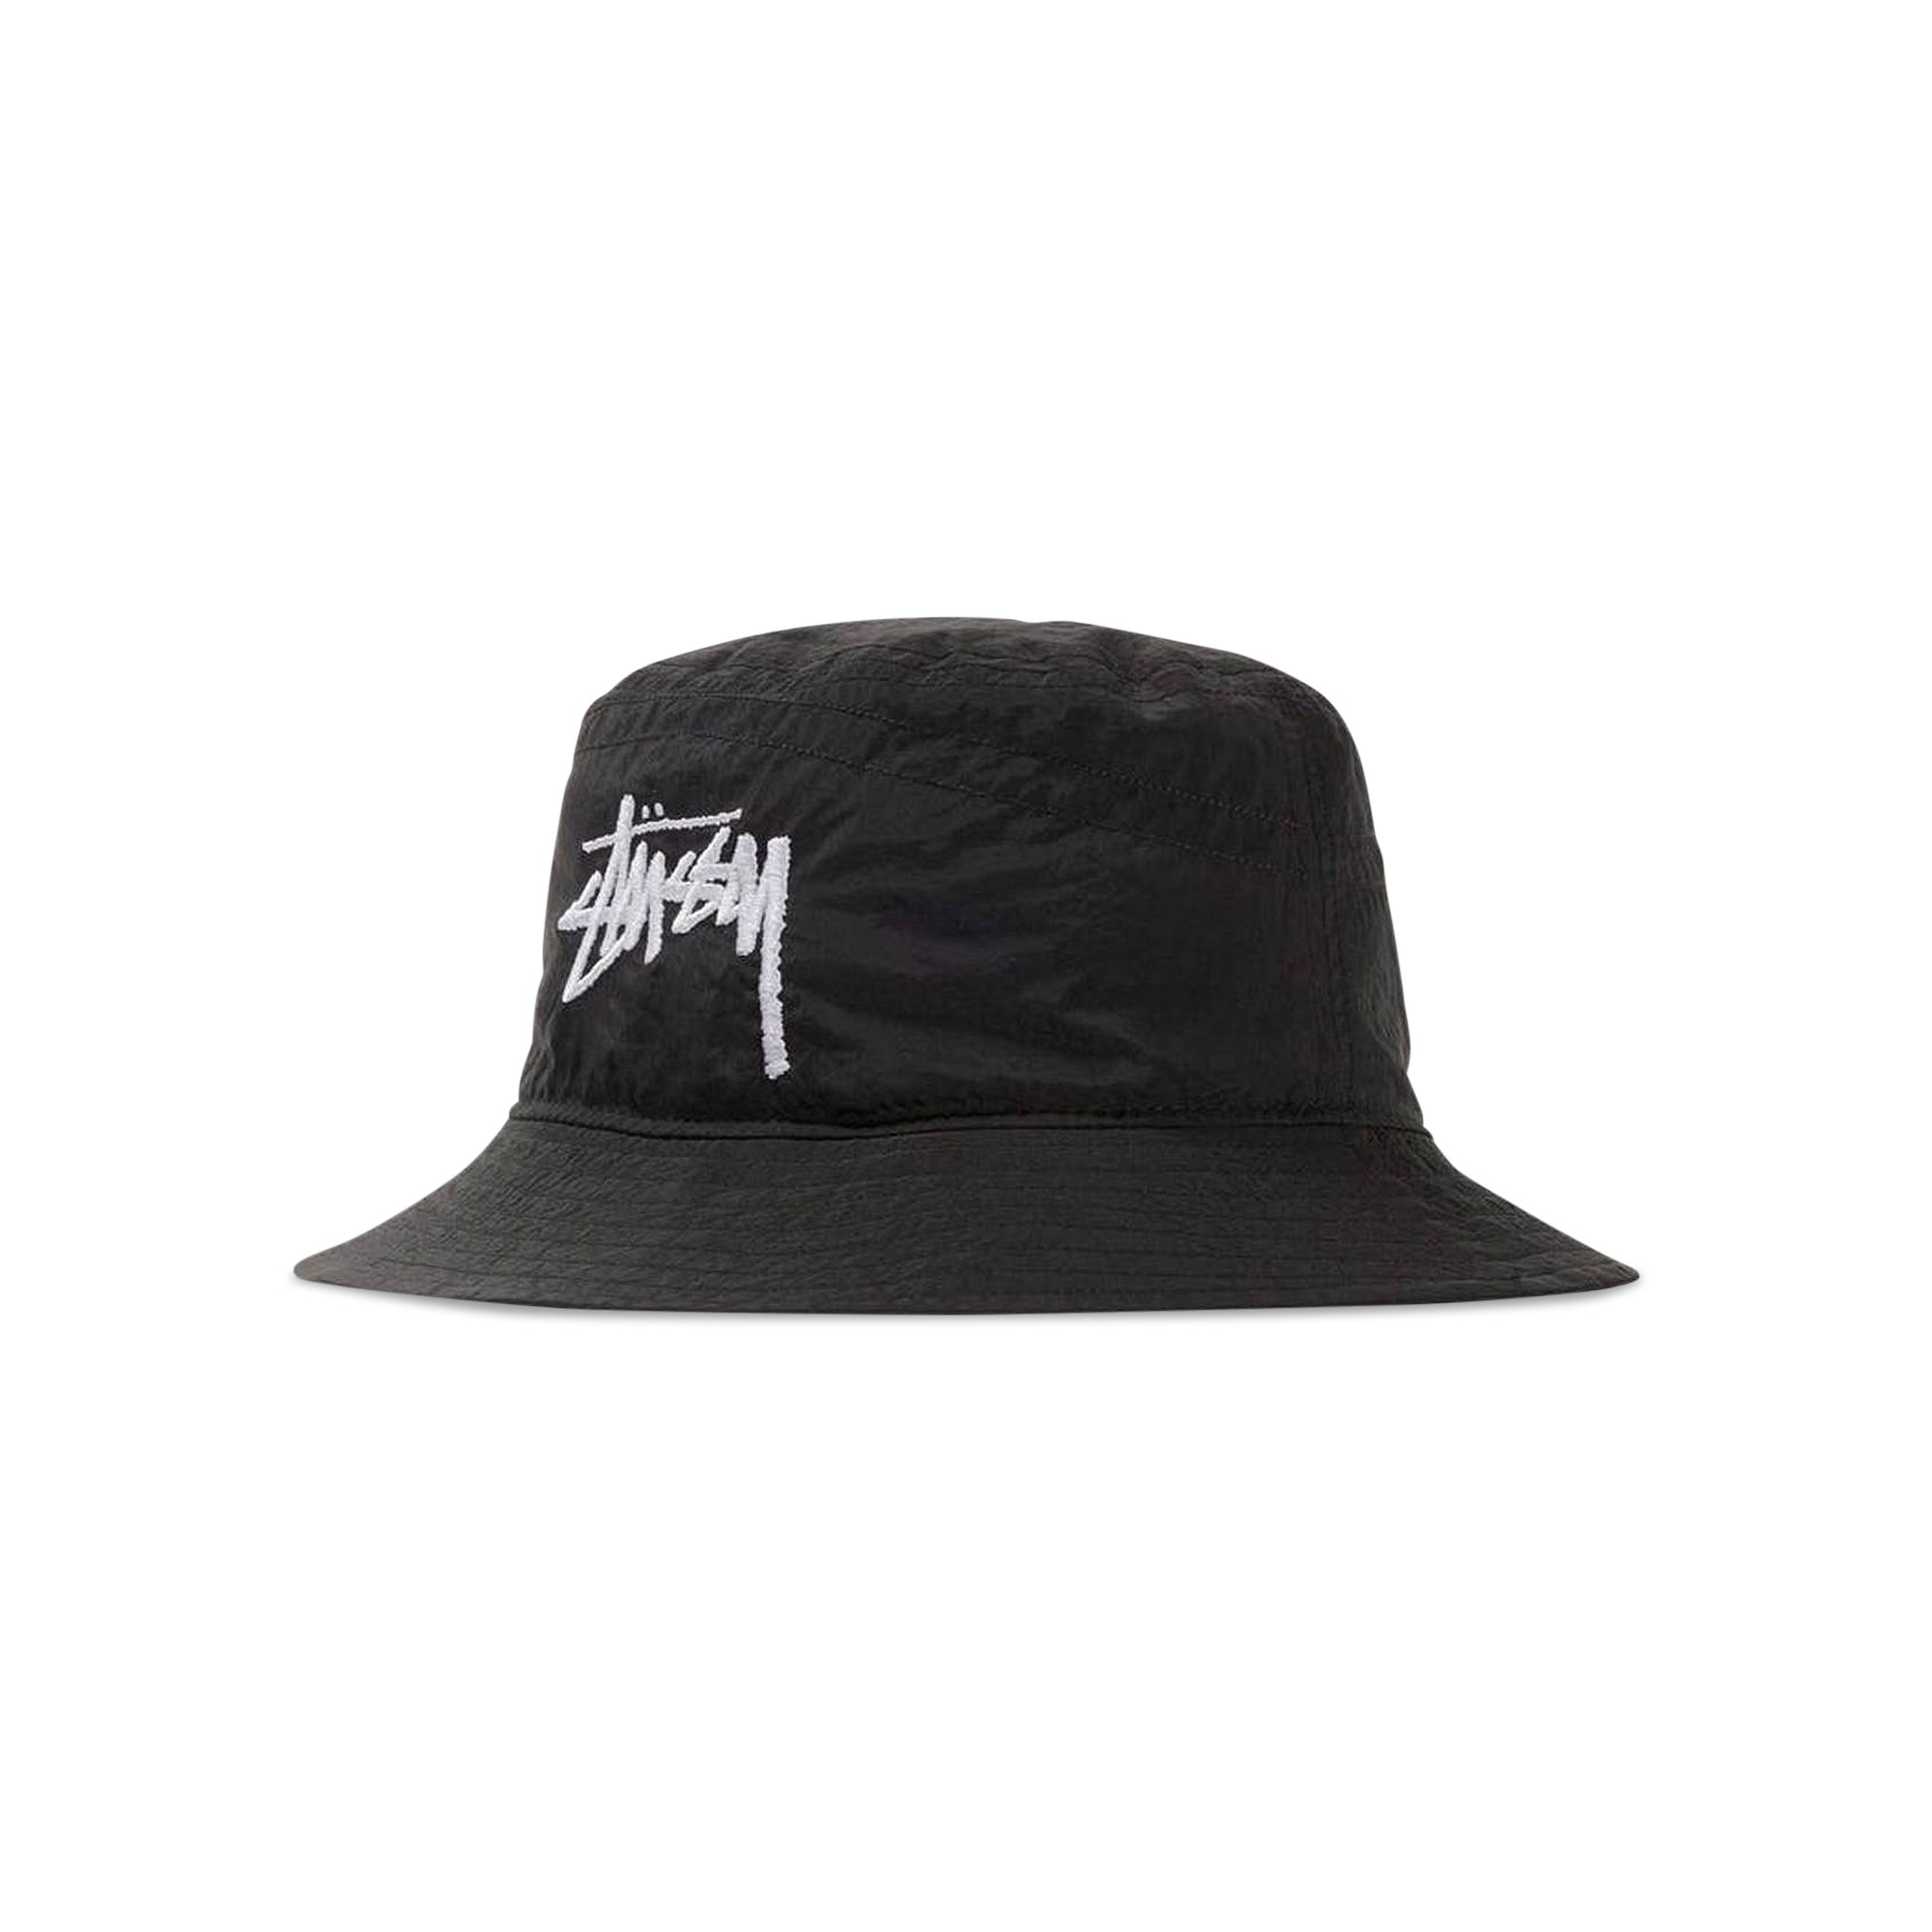 Nike x Stussy Bucket Hat 'Black'